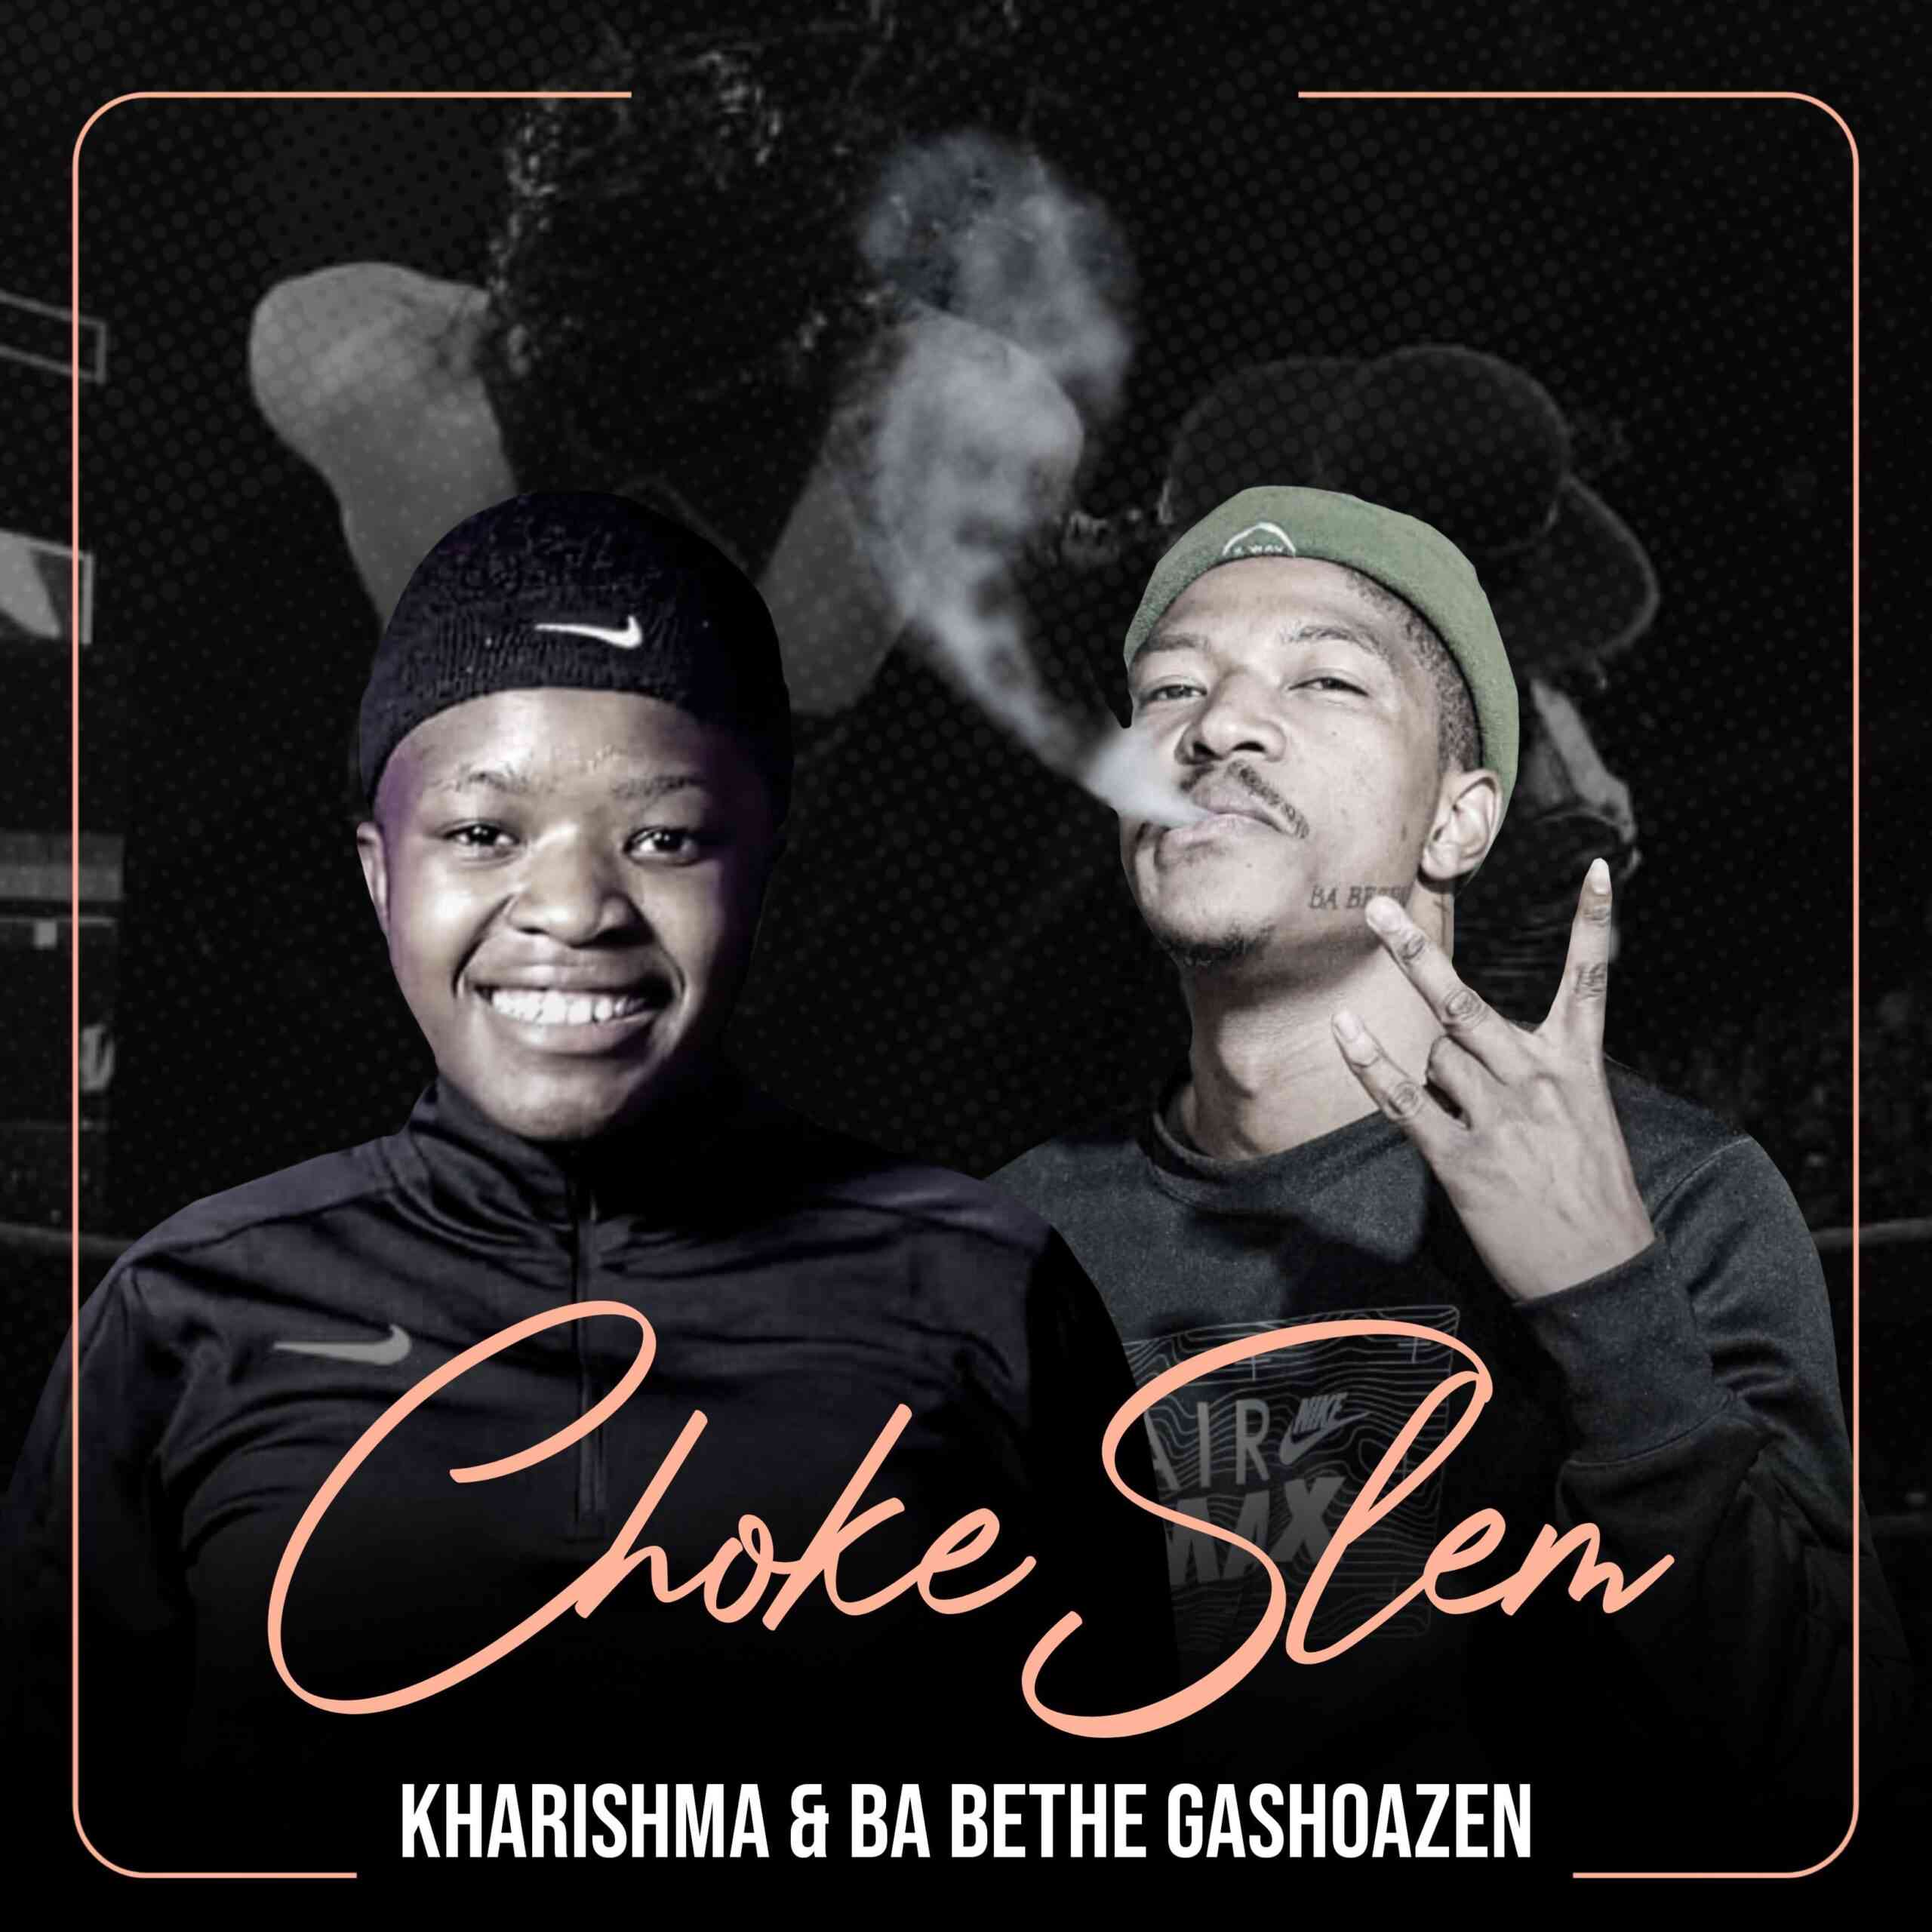 Kharishma & Ba Bethe Gashozen - Chokeslem